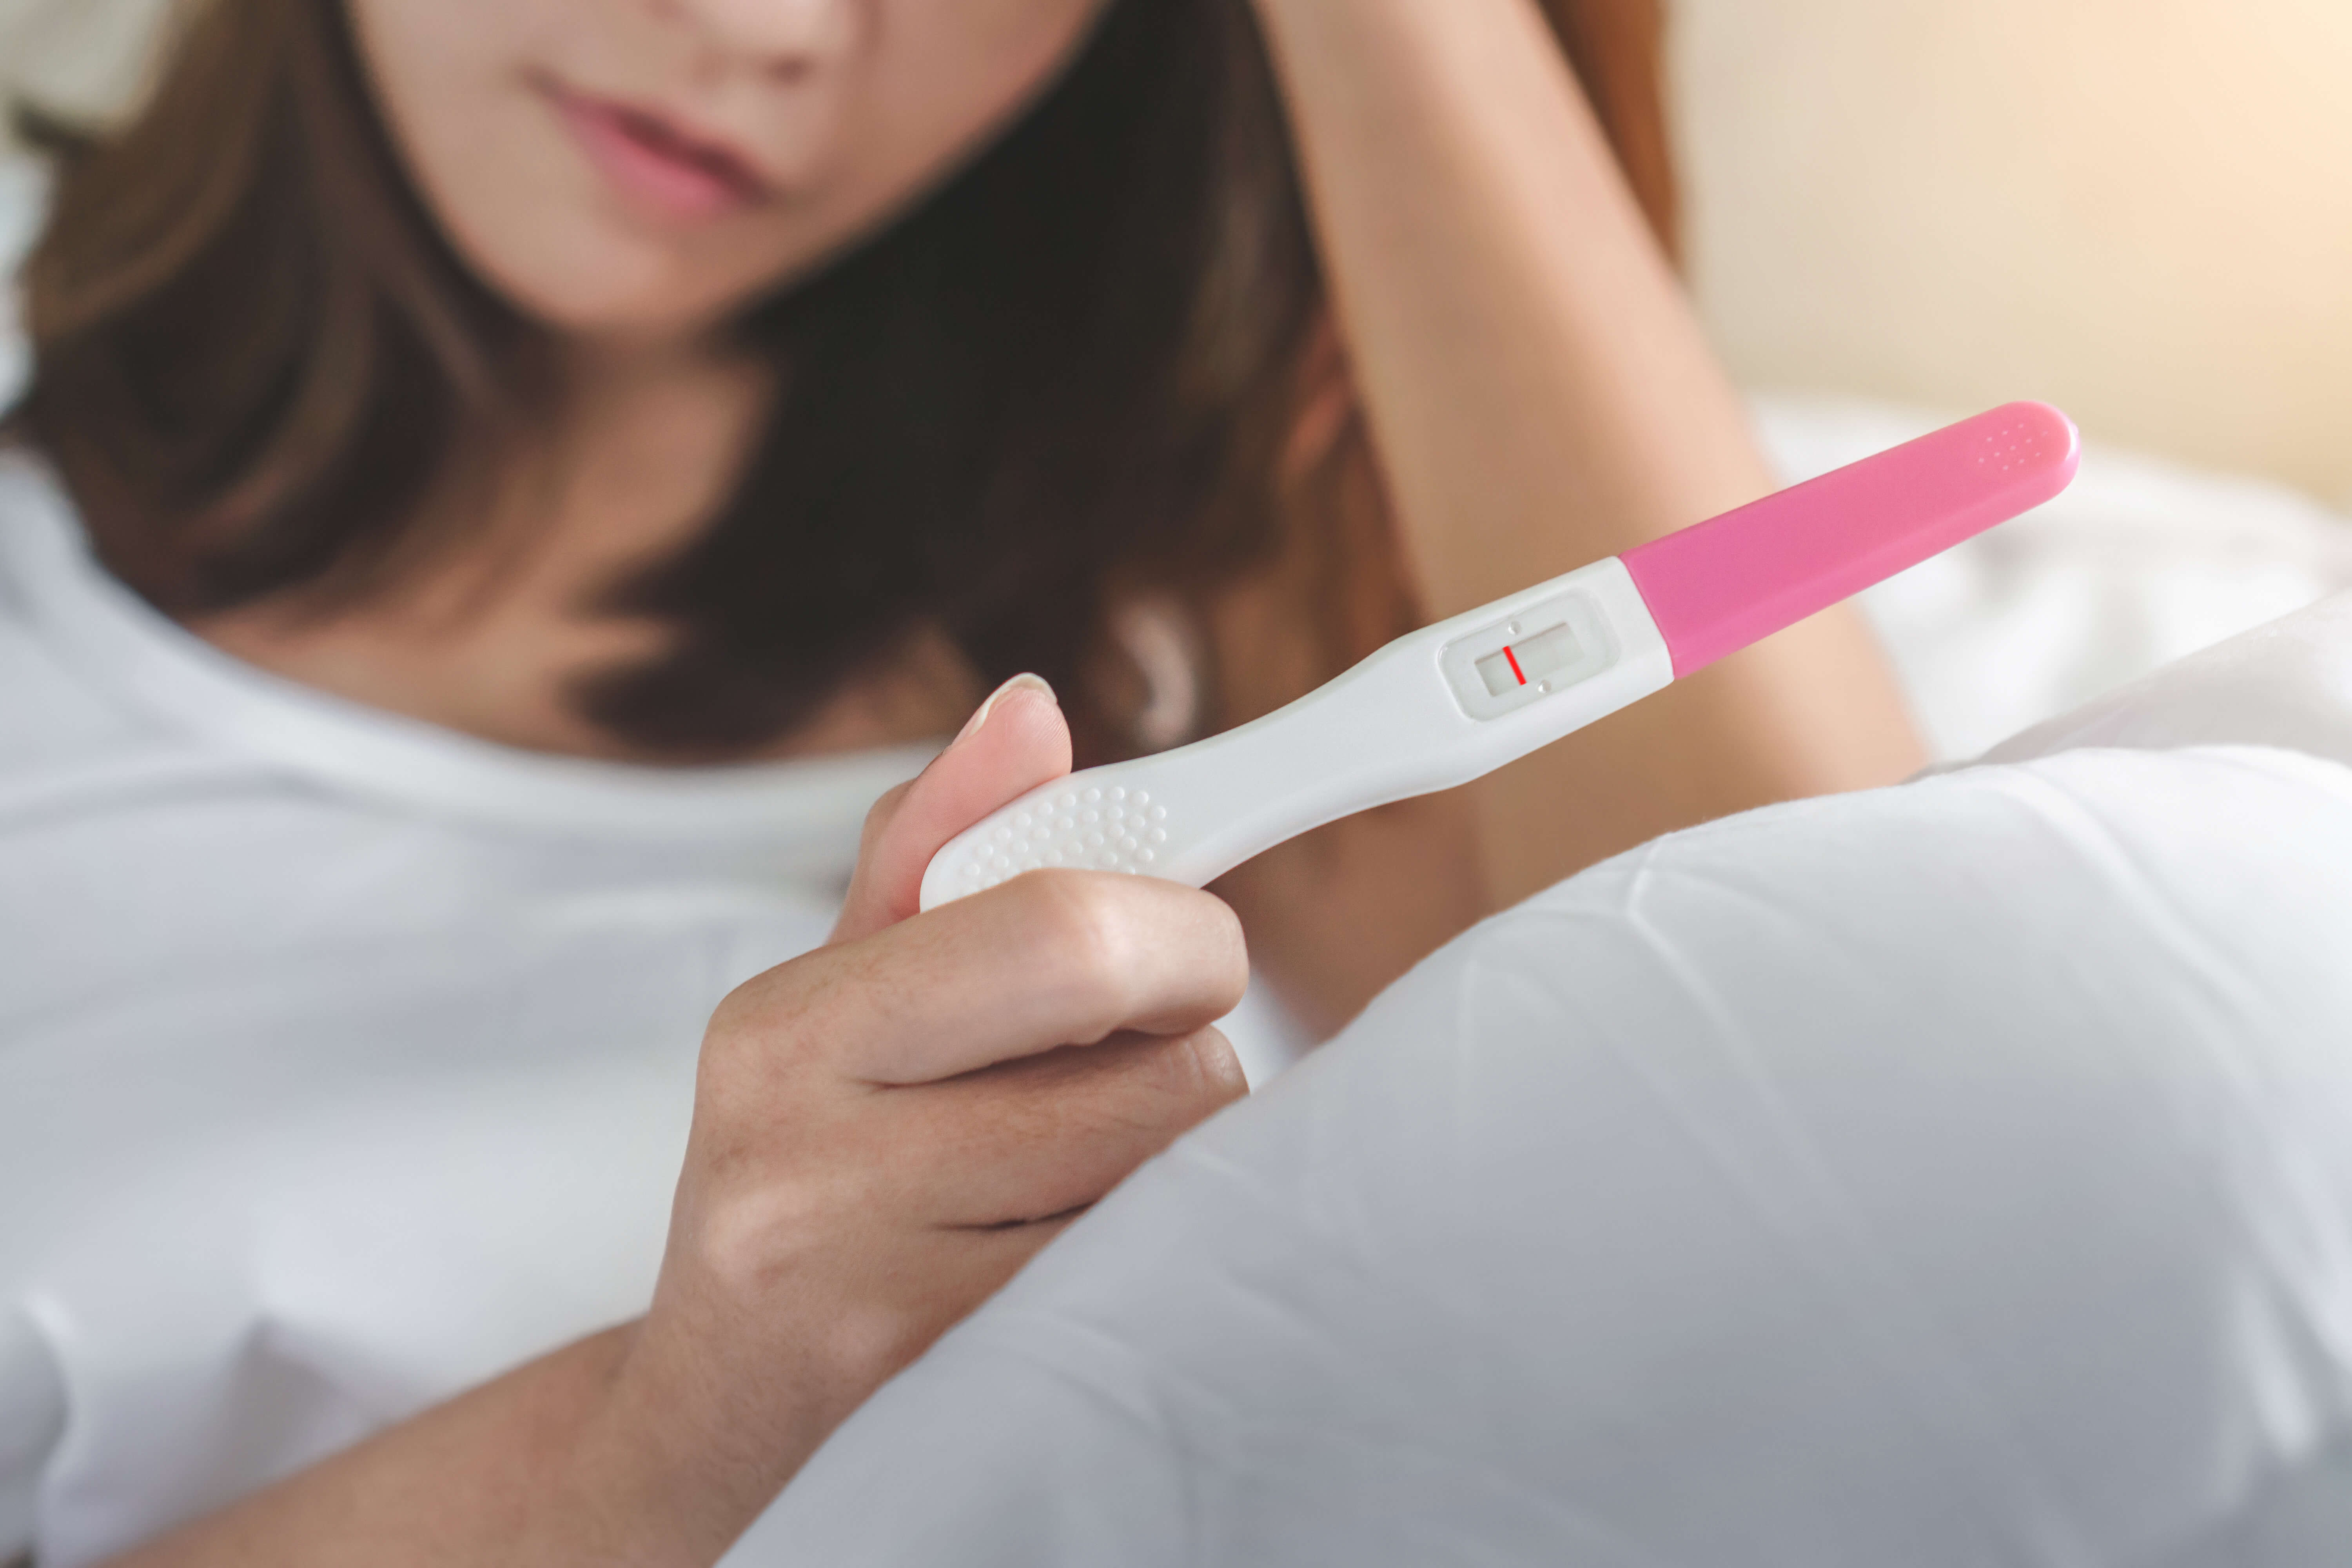 I Cannot Conceive, Do I Need IVF Treatment?